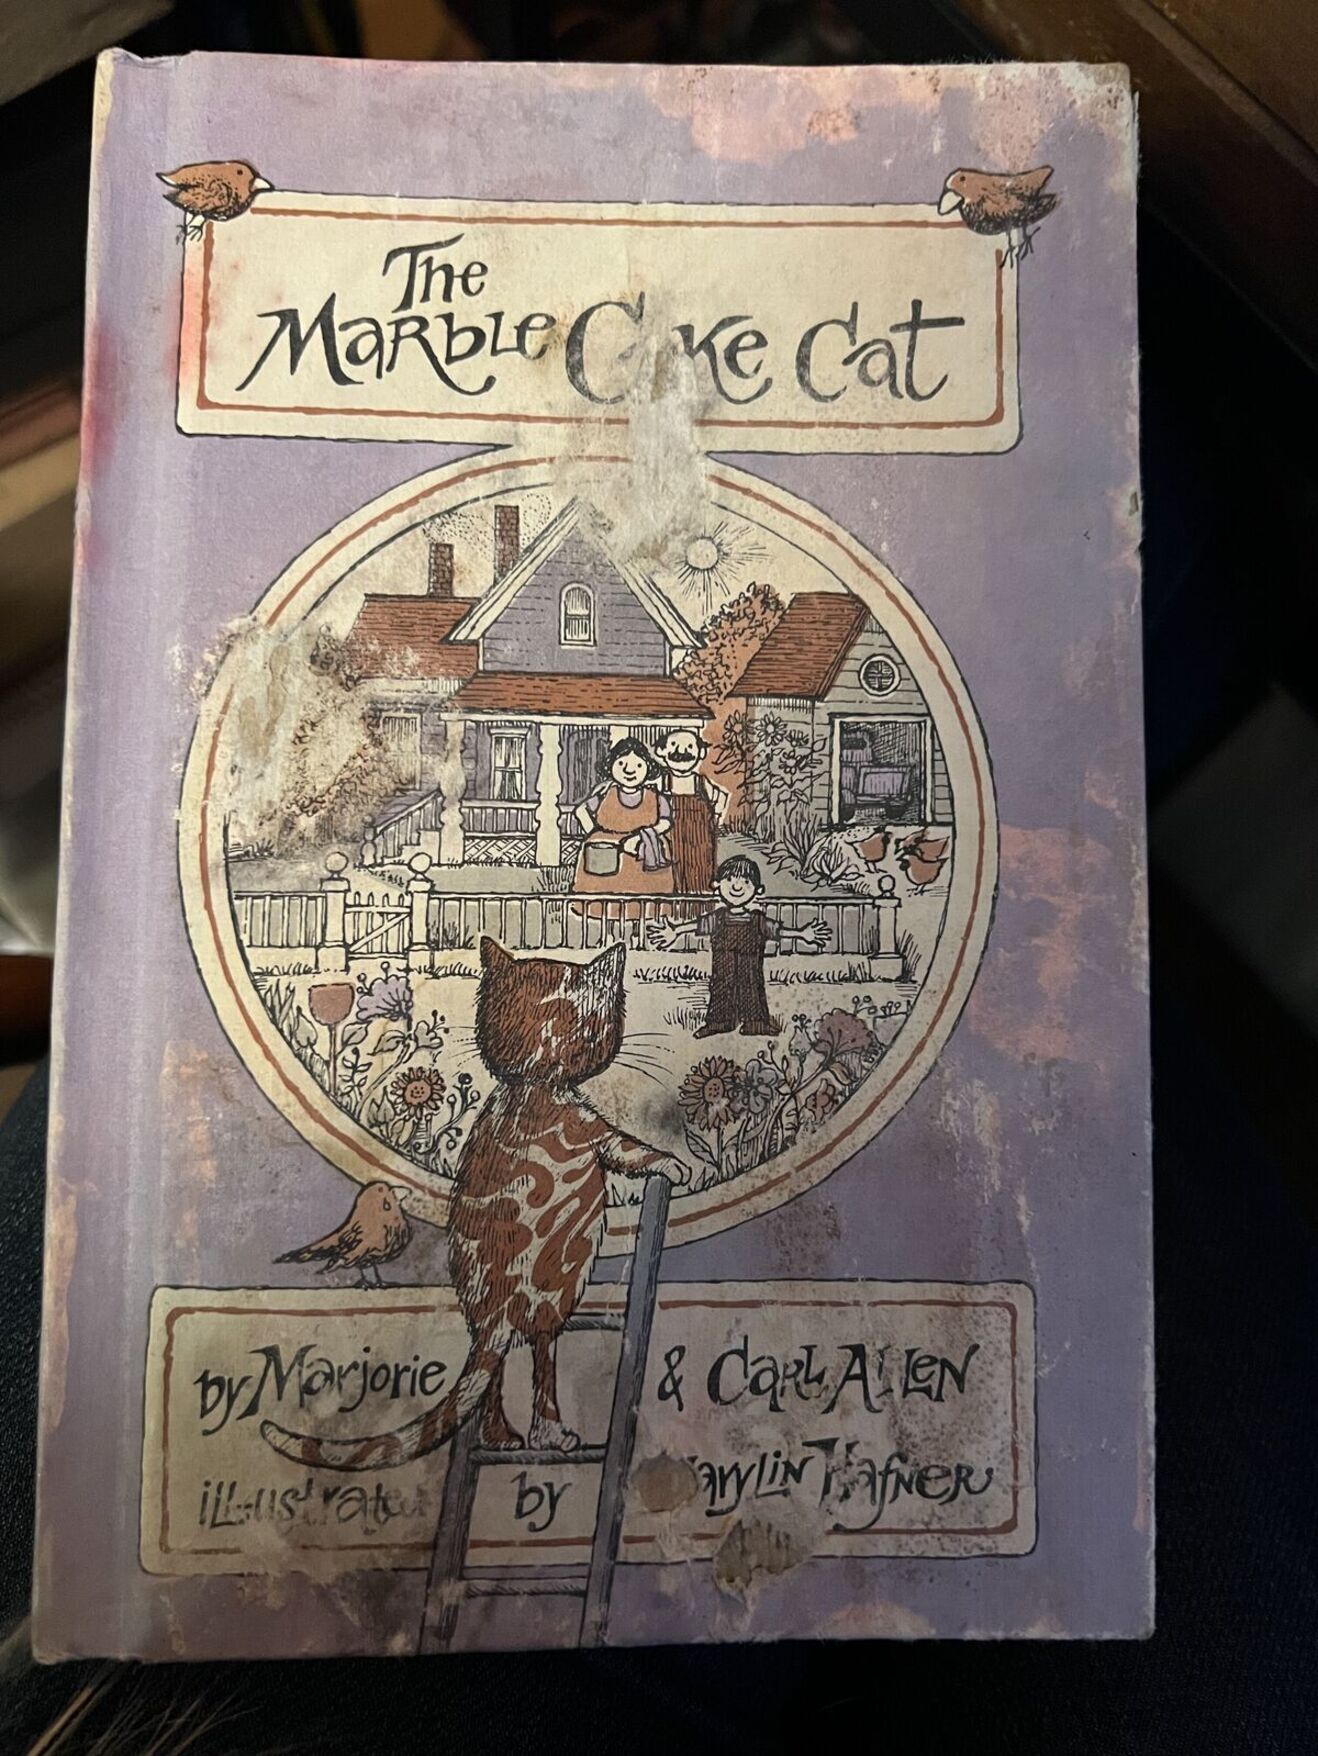 An old, purple children's book